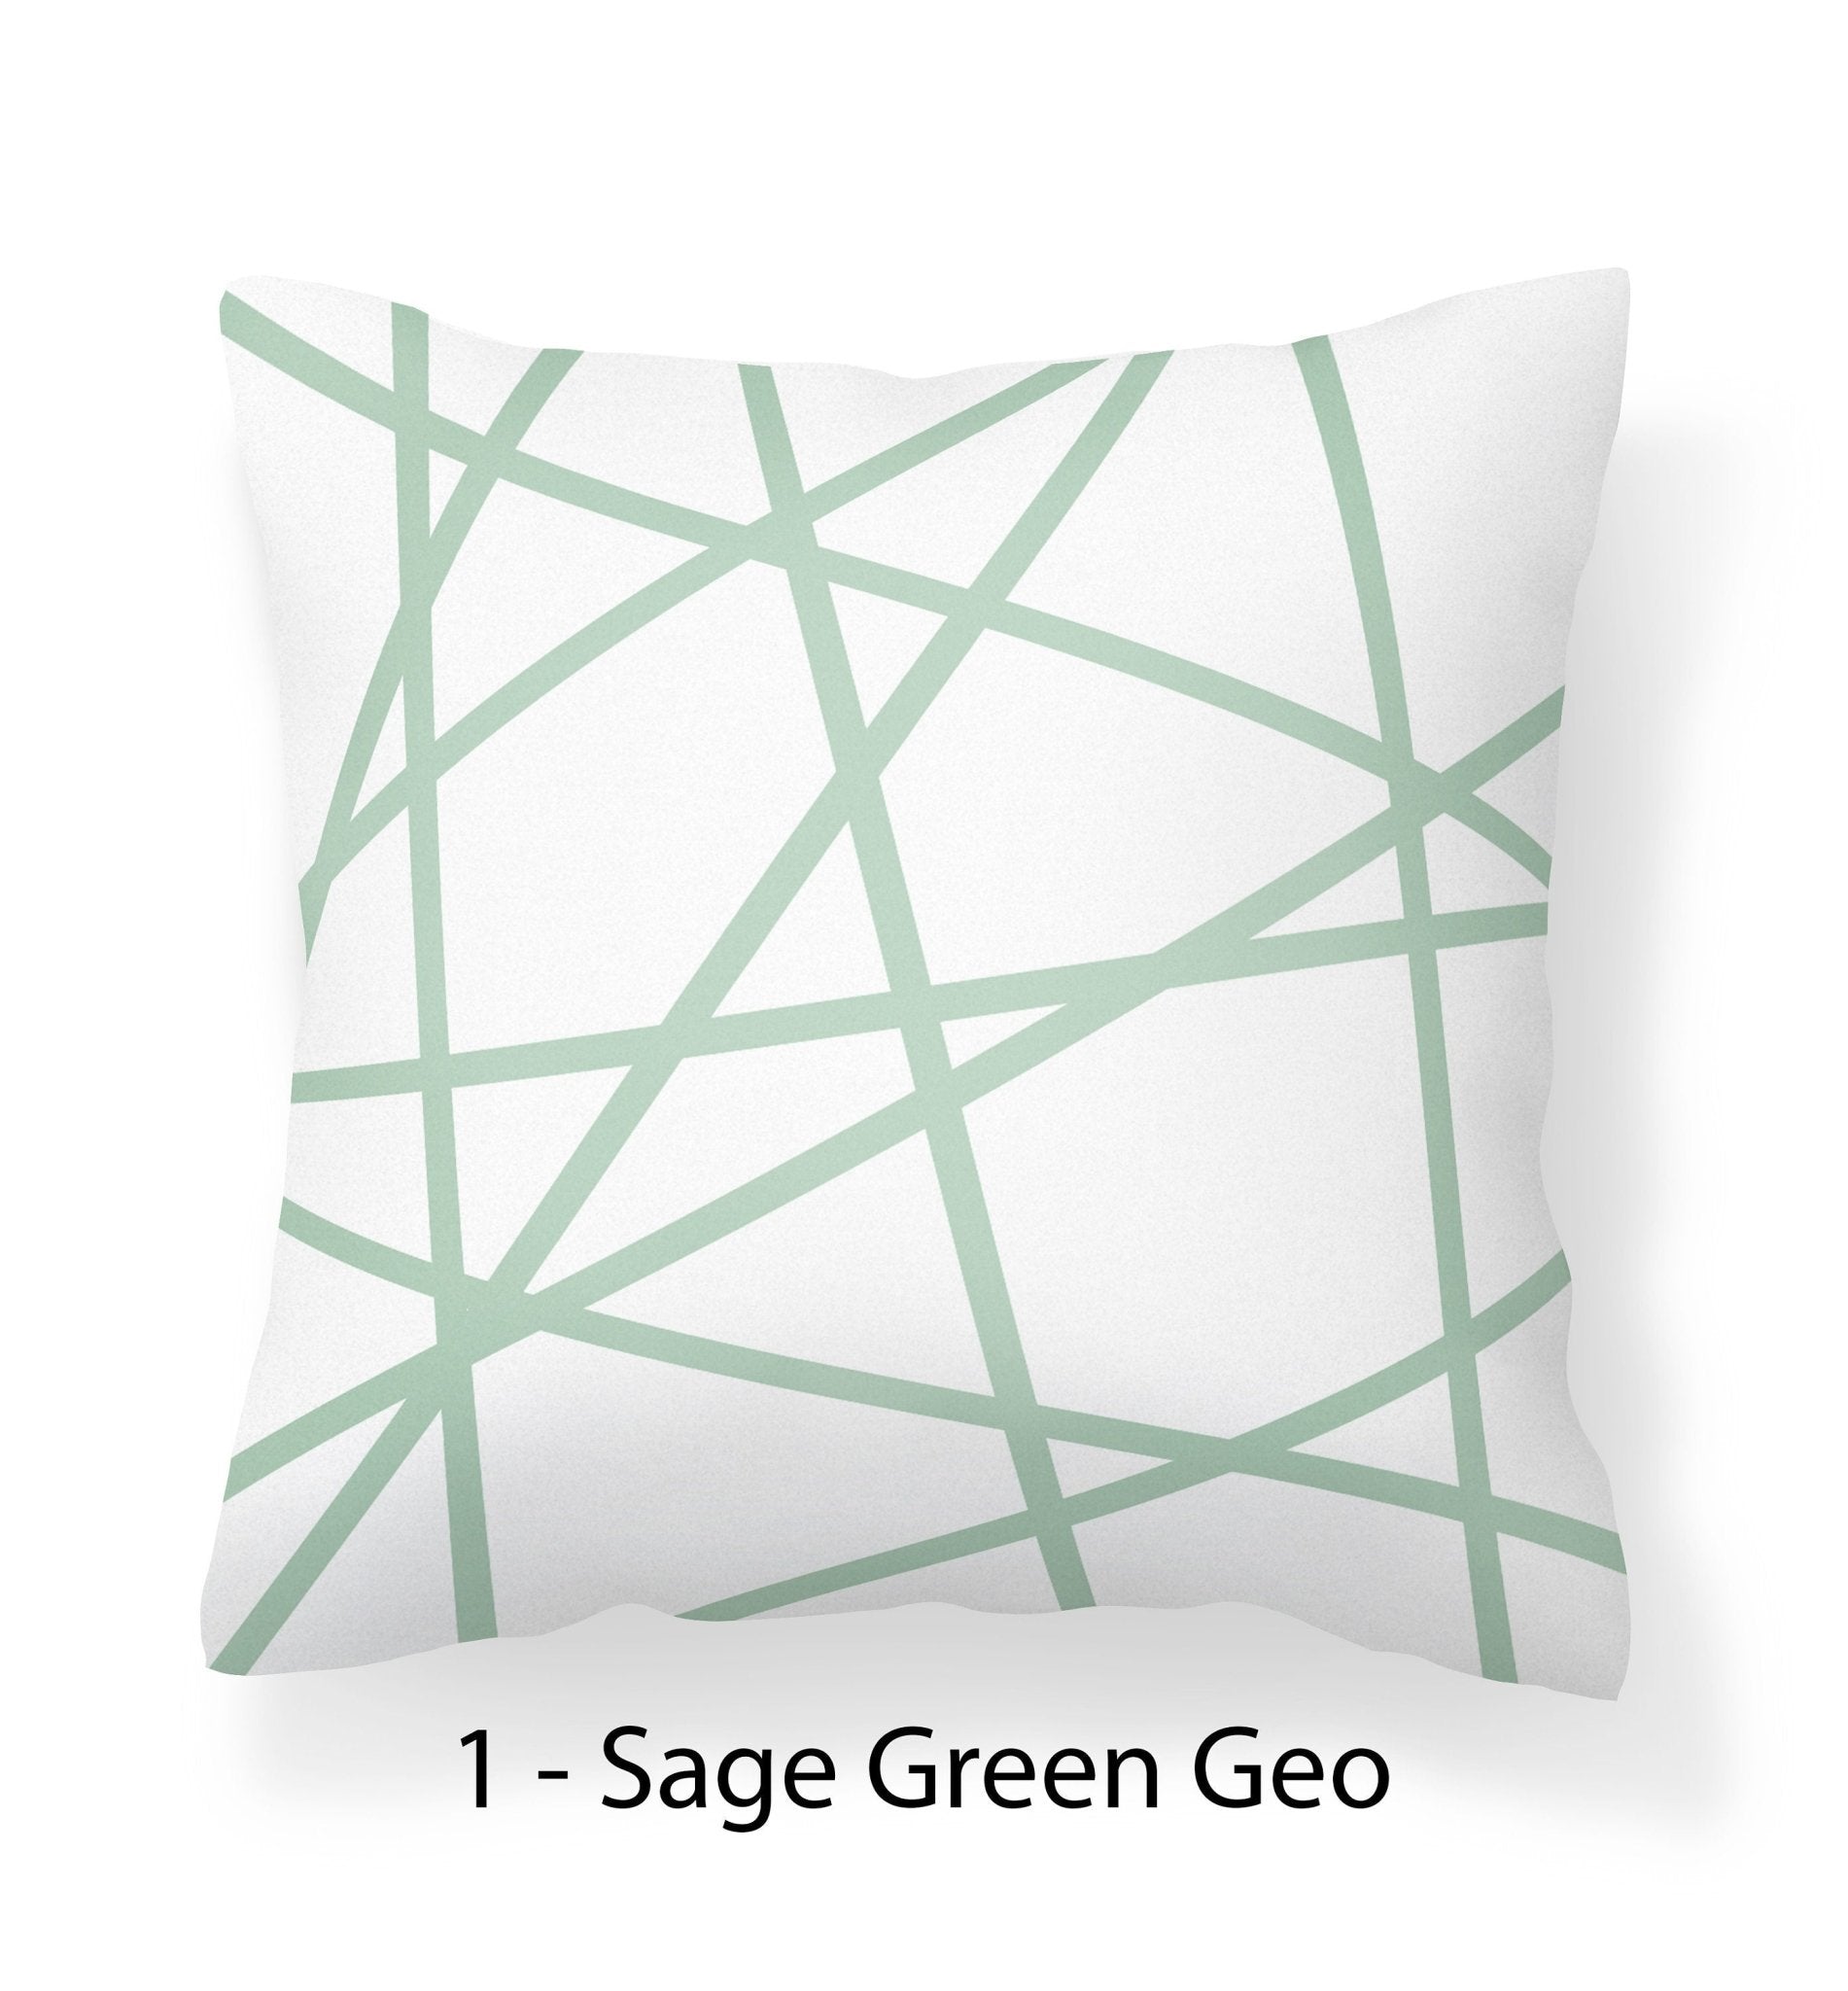 Sage Green Striped Pillow